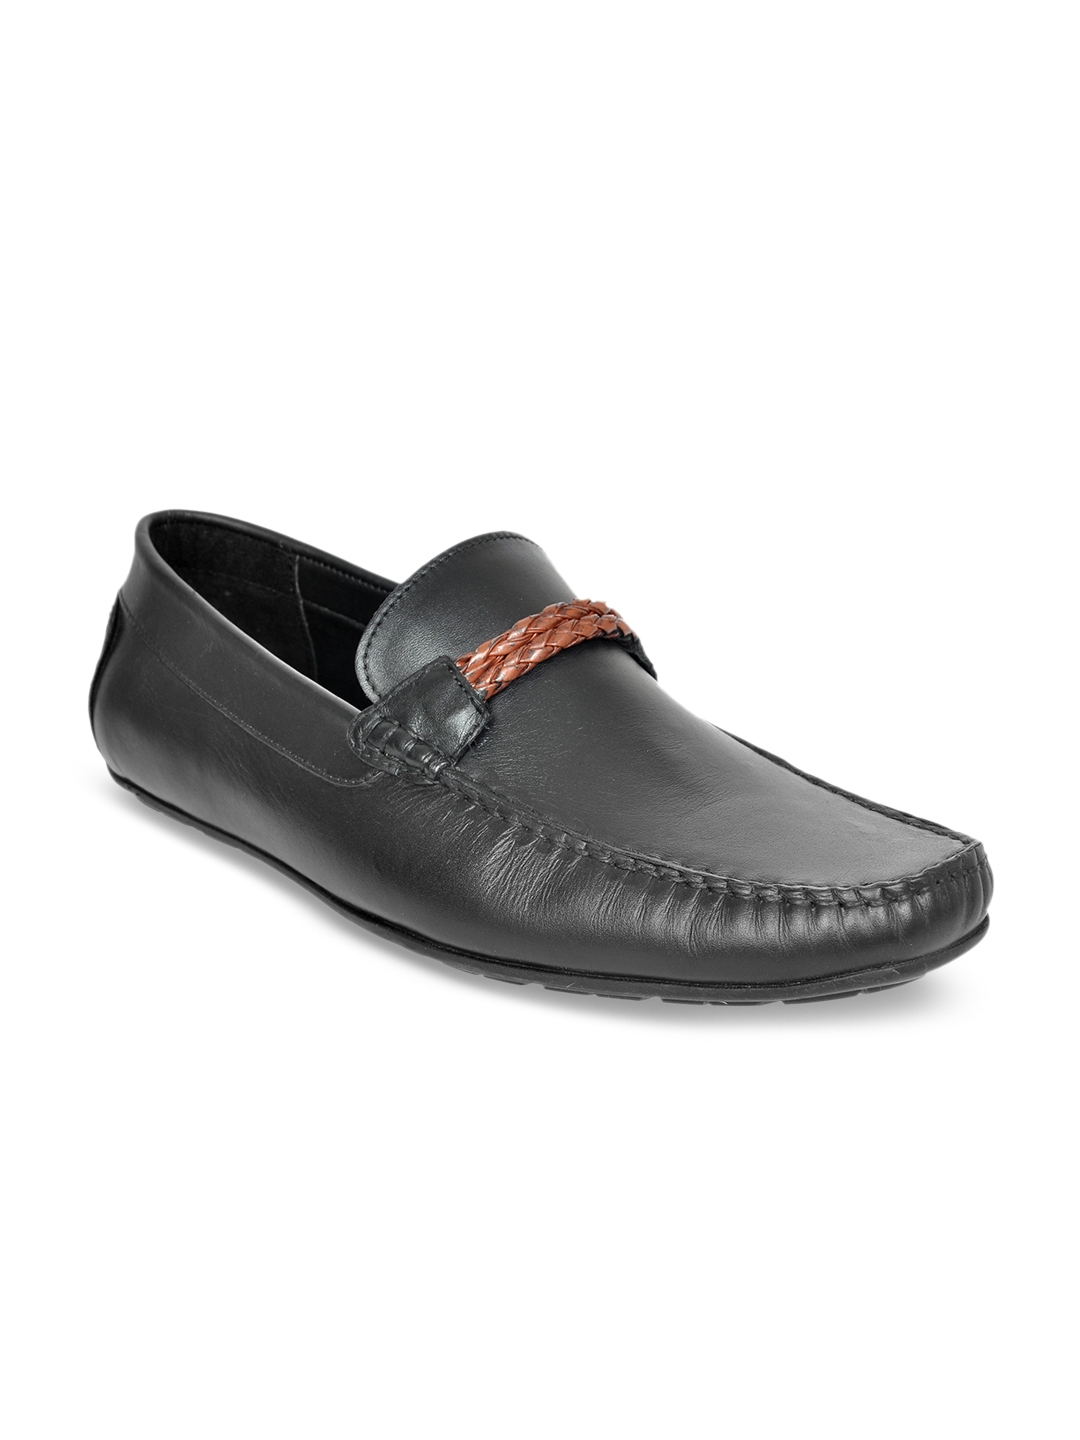 Buy Allen Cooper Men Black Leather Loafers - Casual Shoes for Men ...